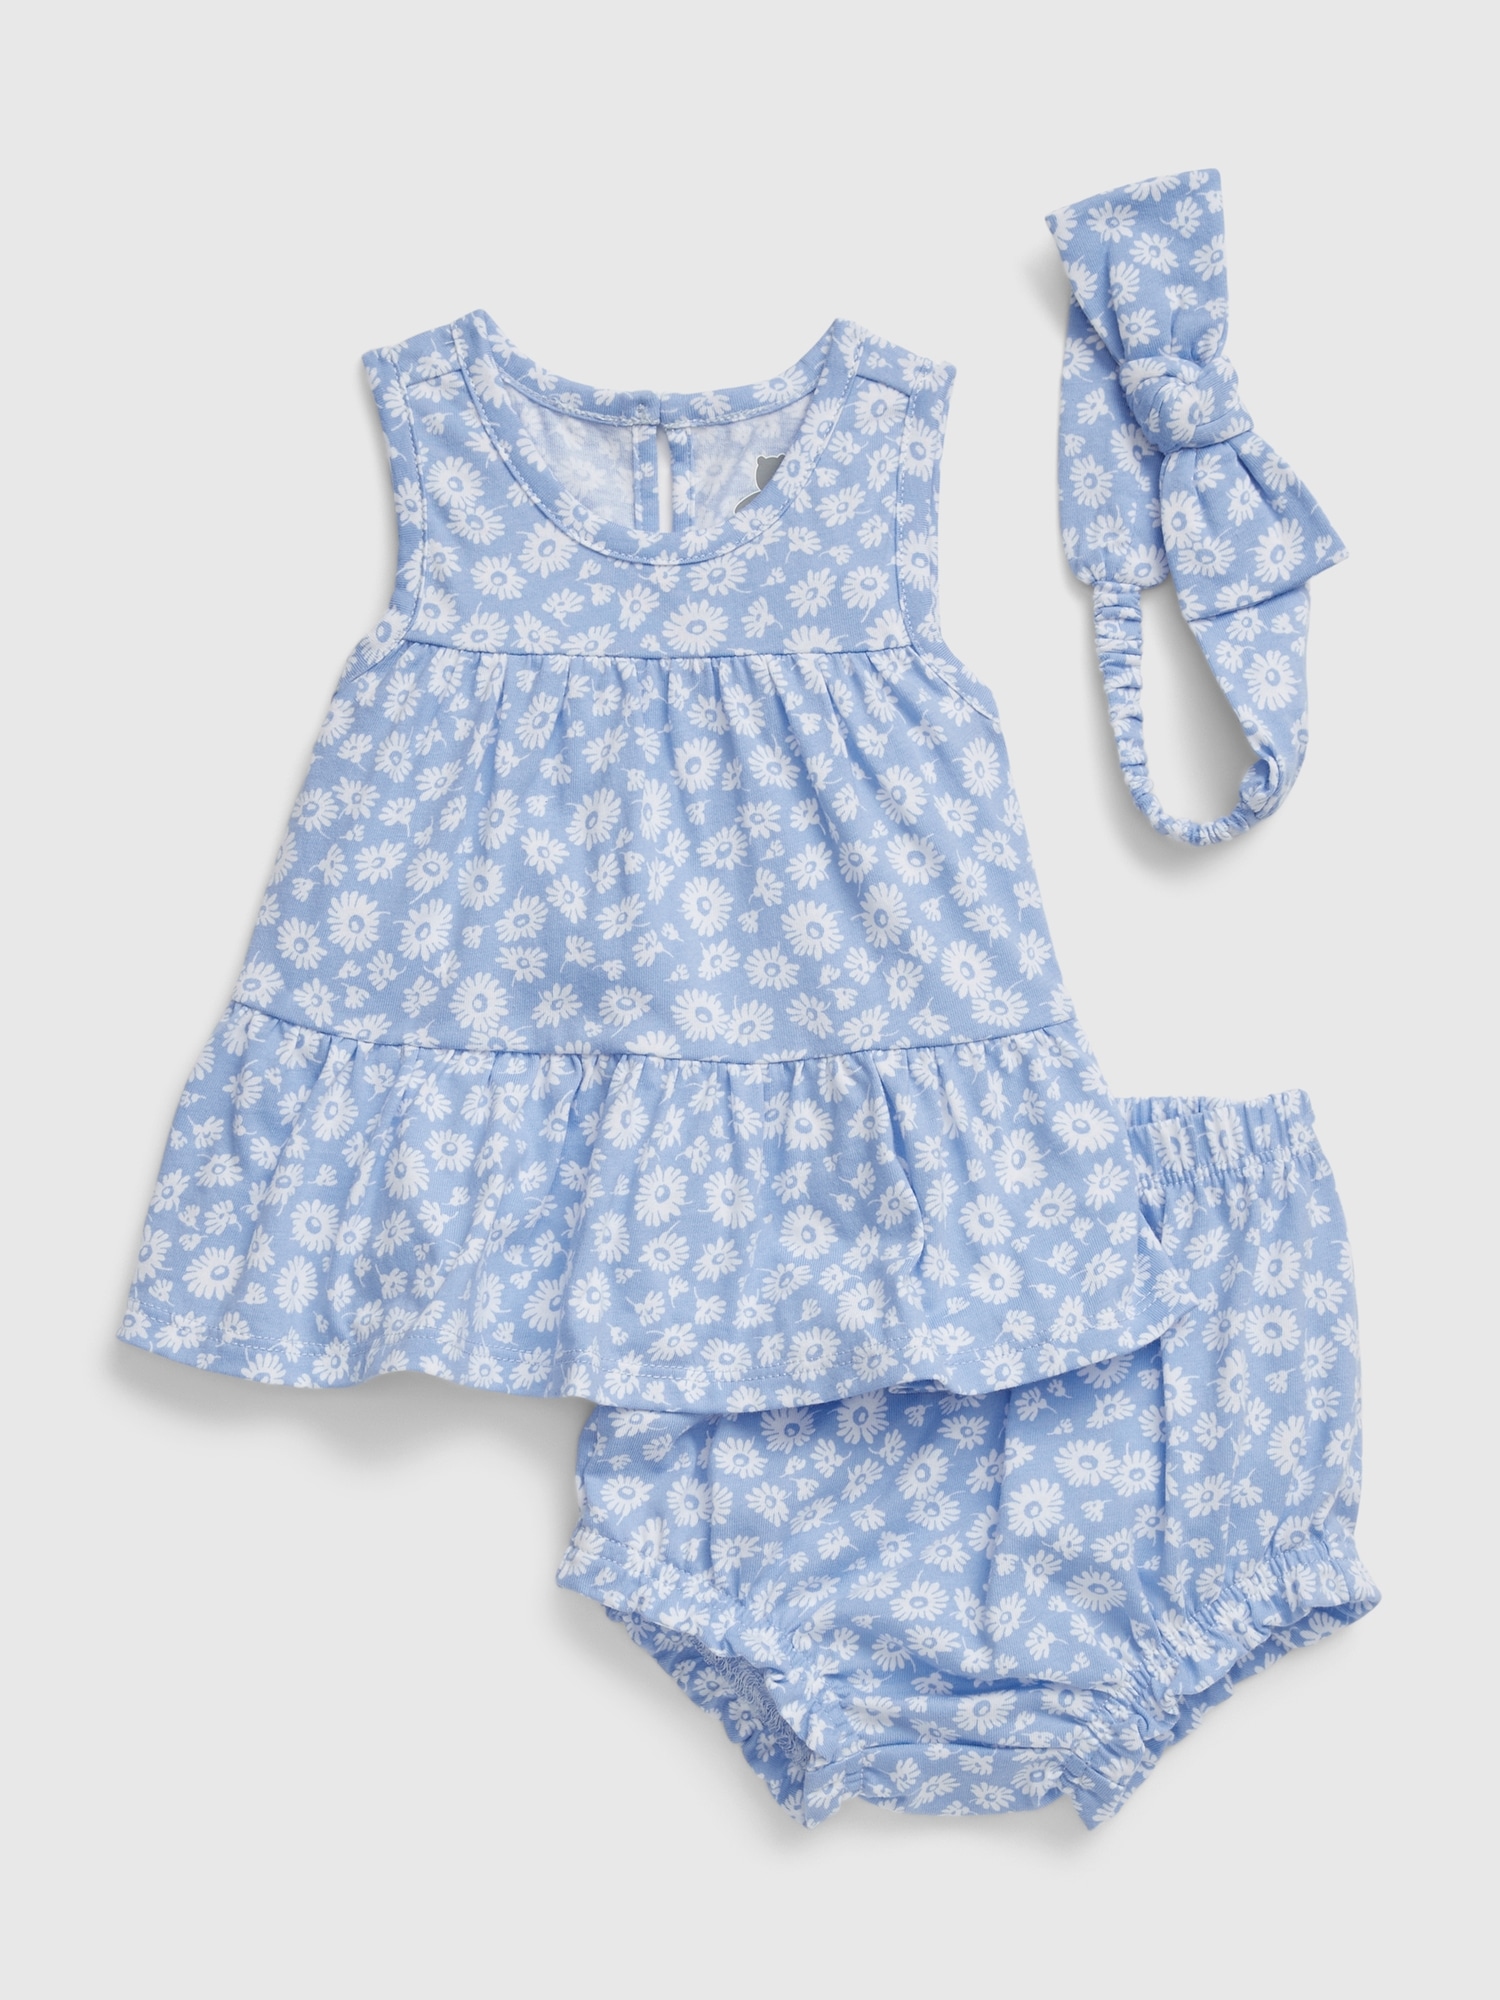 Baby Peplum 3-Piece Outfit Set | Gap